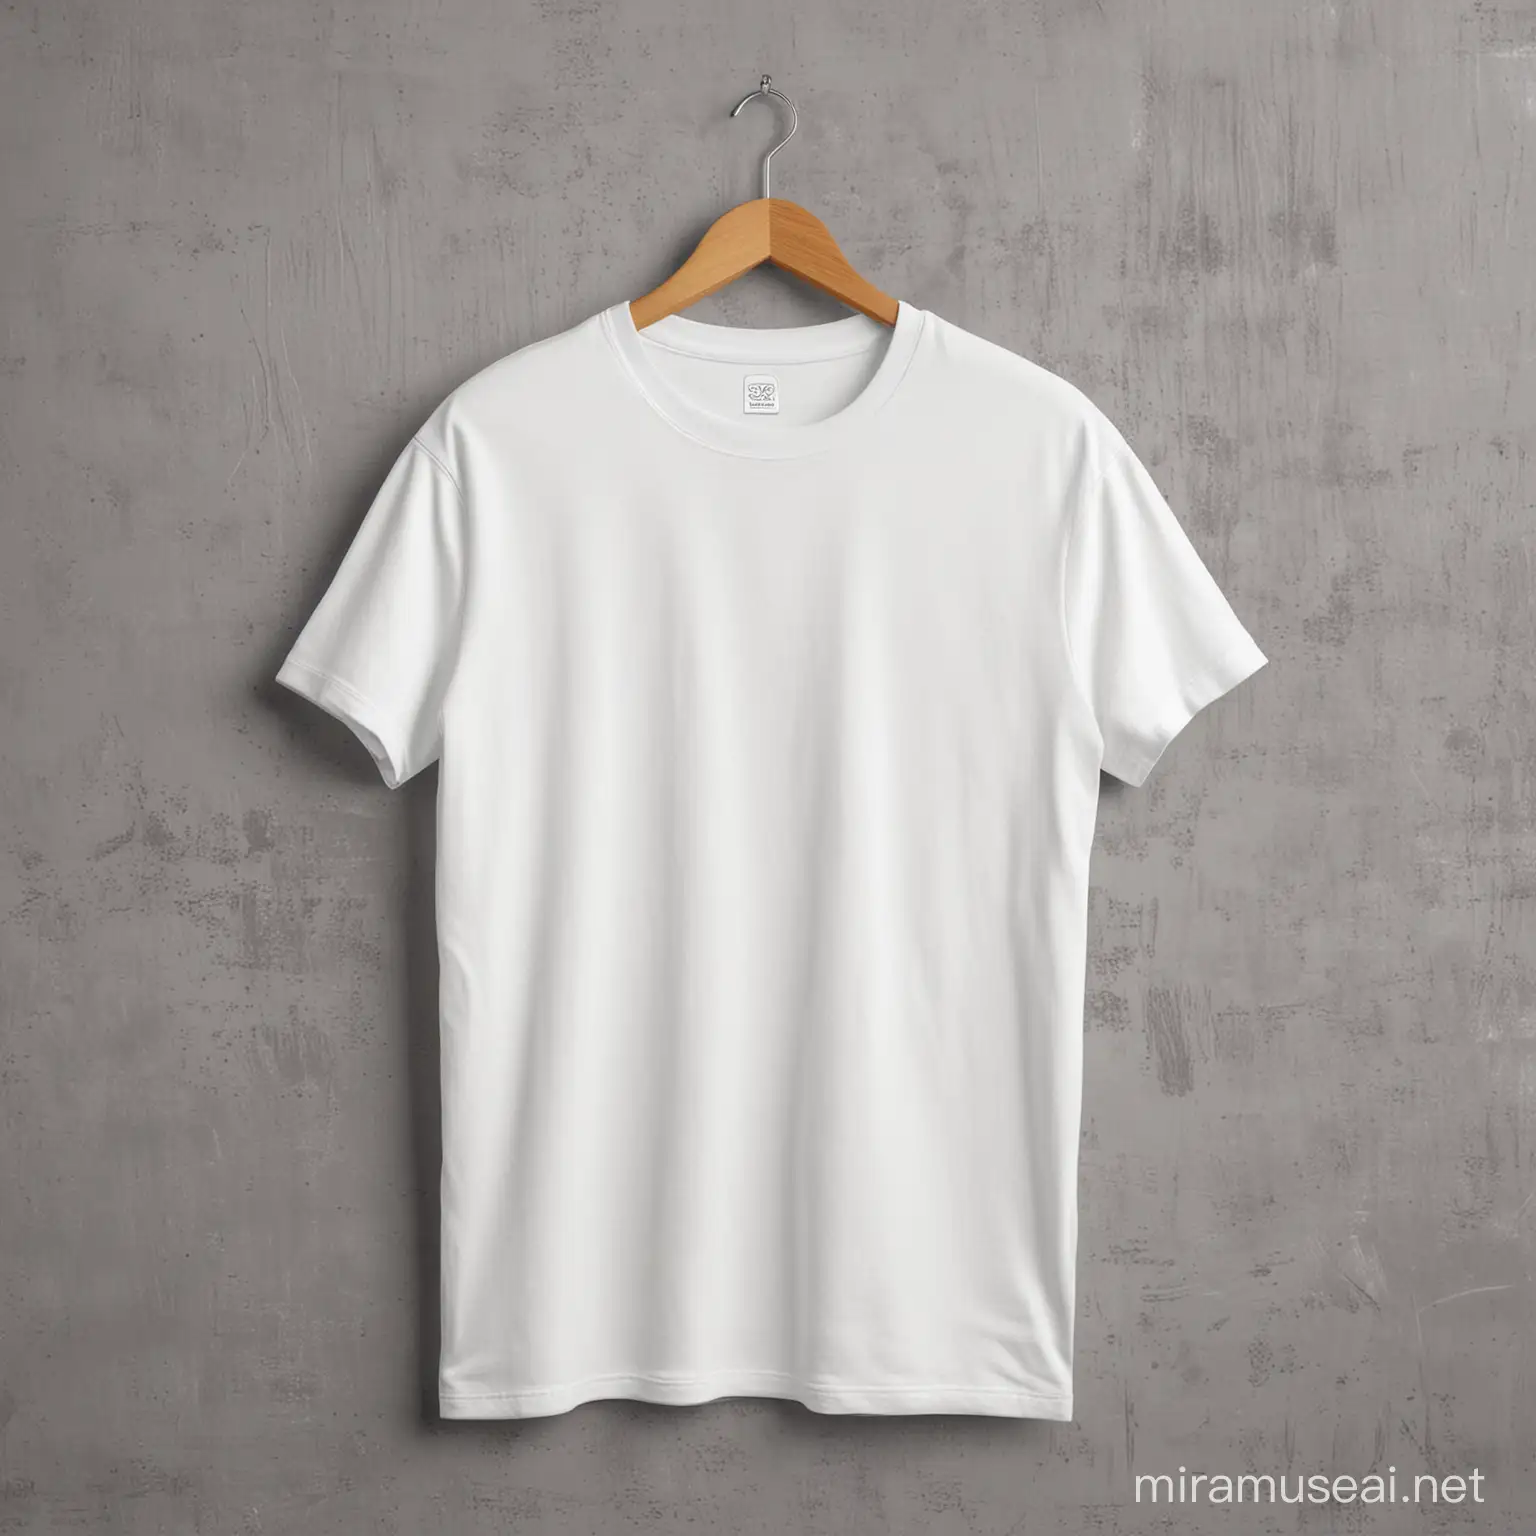 Gildan 64000 t-shirt mockup, white t-shirt.